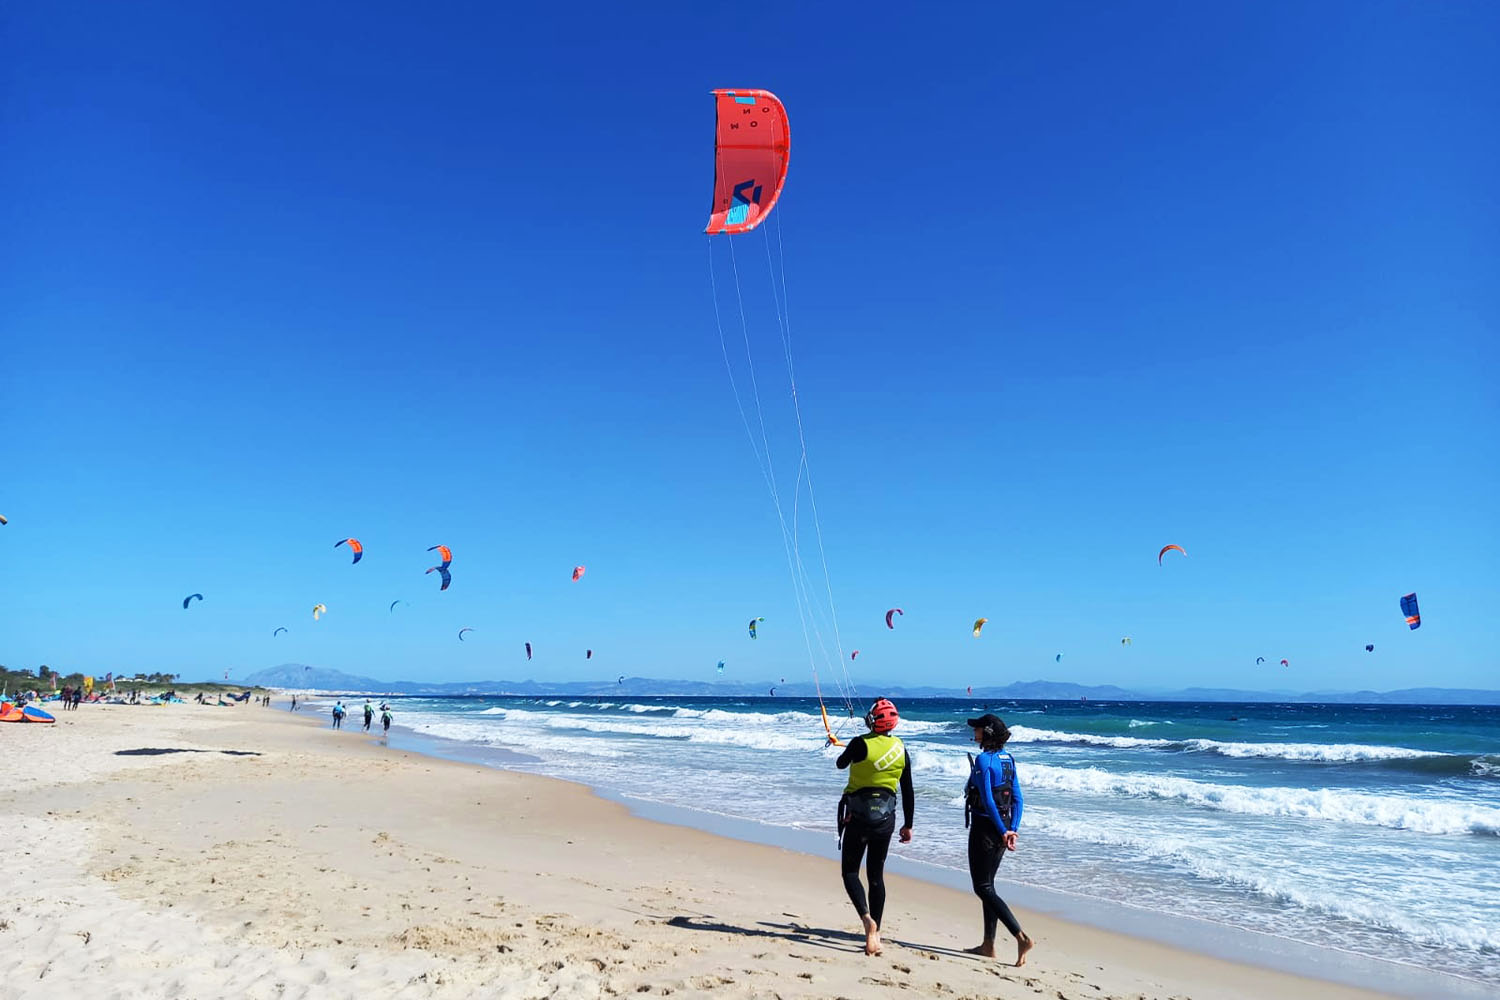 Kitesurf beginner lesson on the beach in front of the ION CLUB Tarifa center